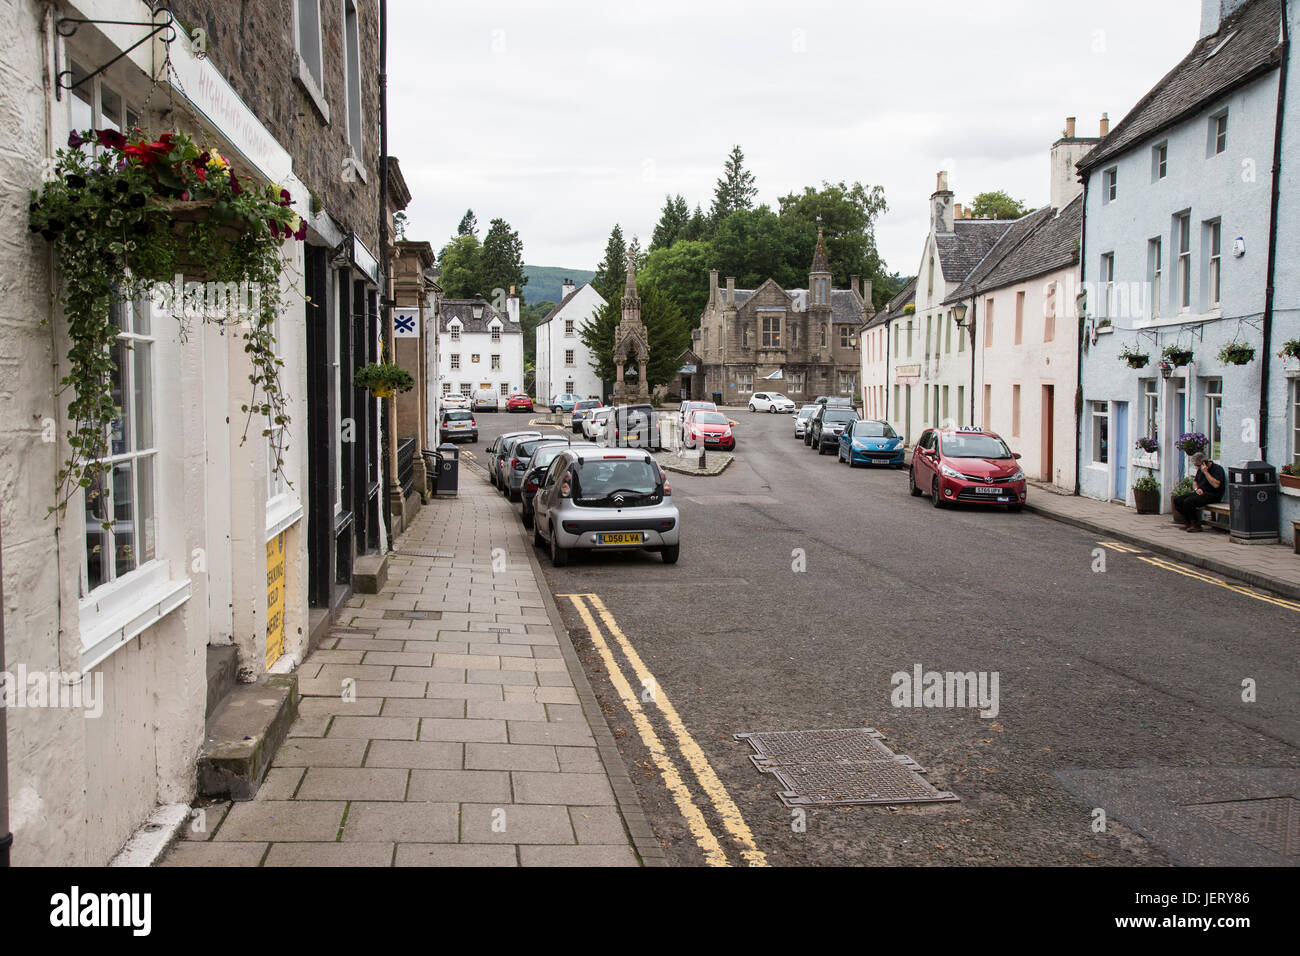 View of High Street in Dunkeld, Scotland Stock Photo